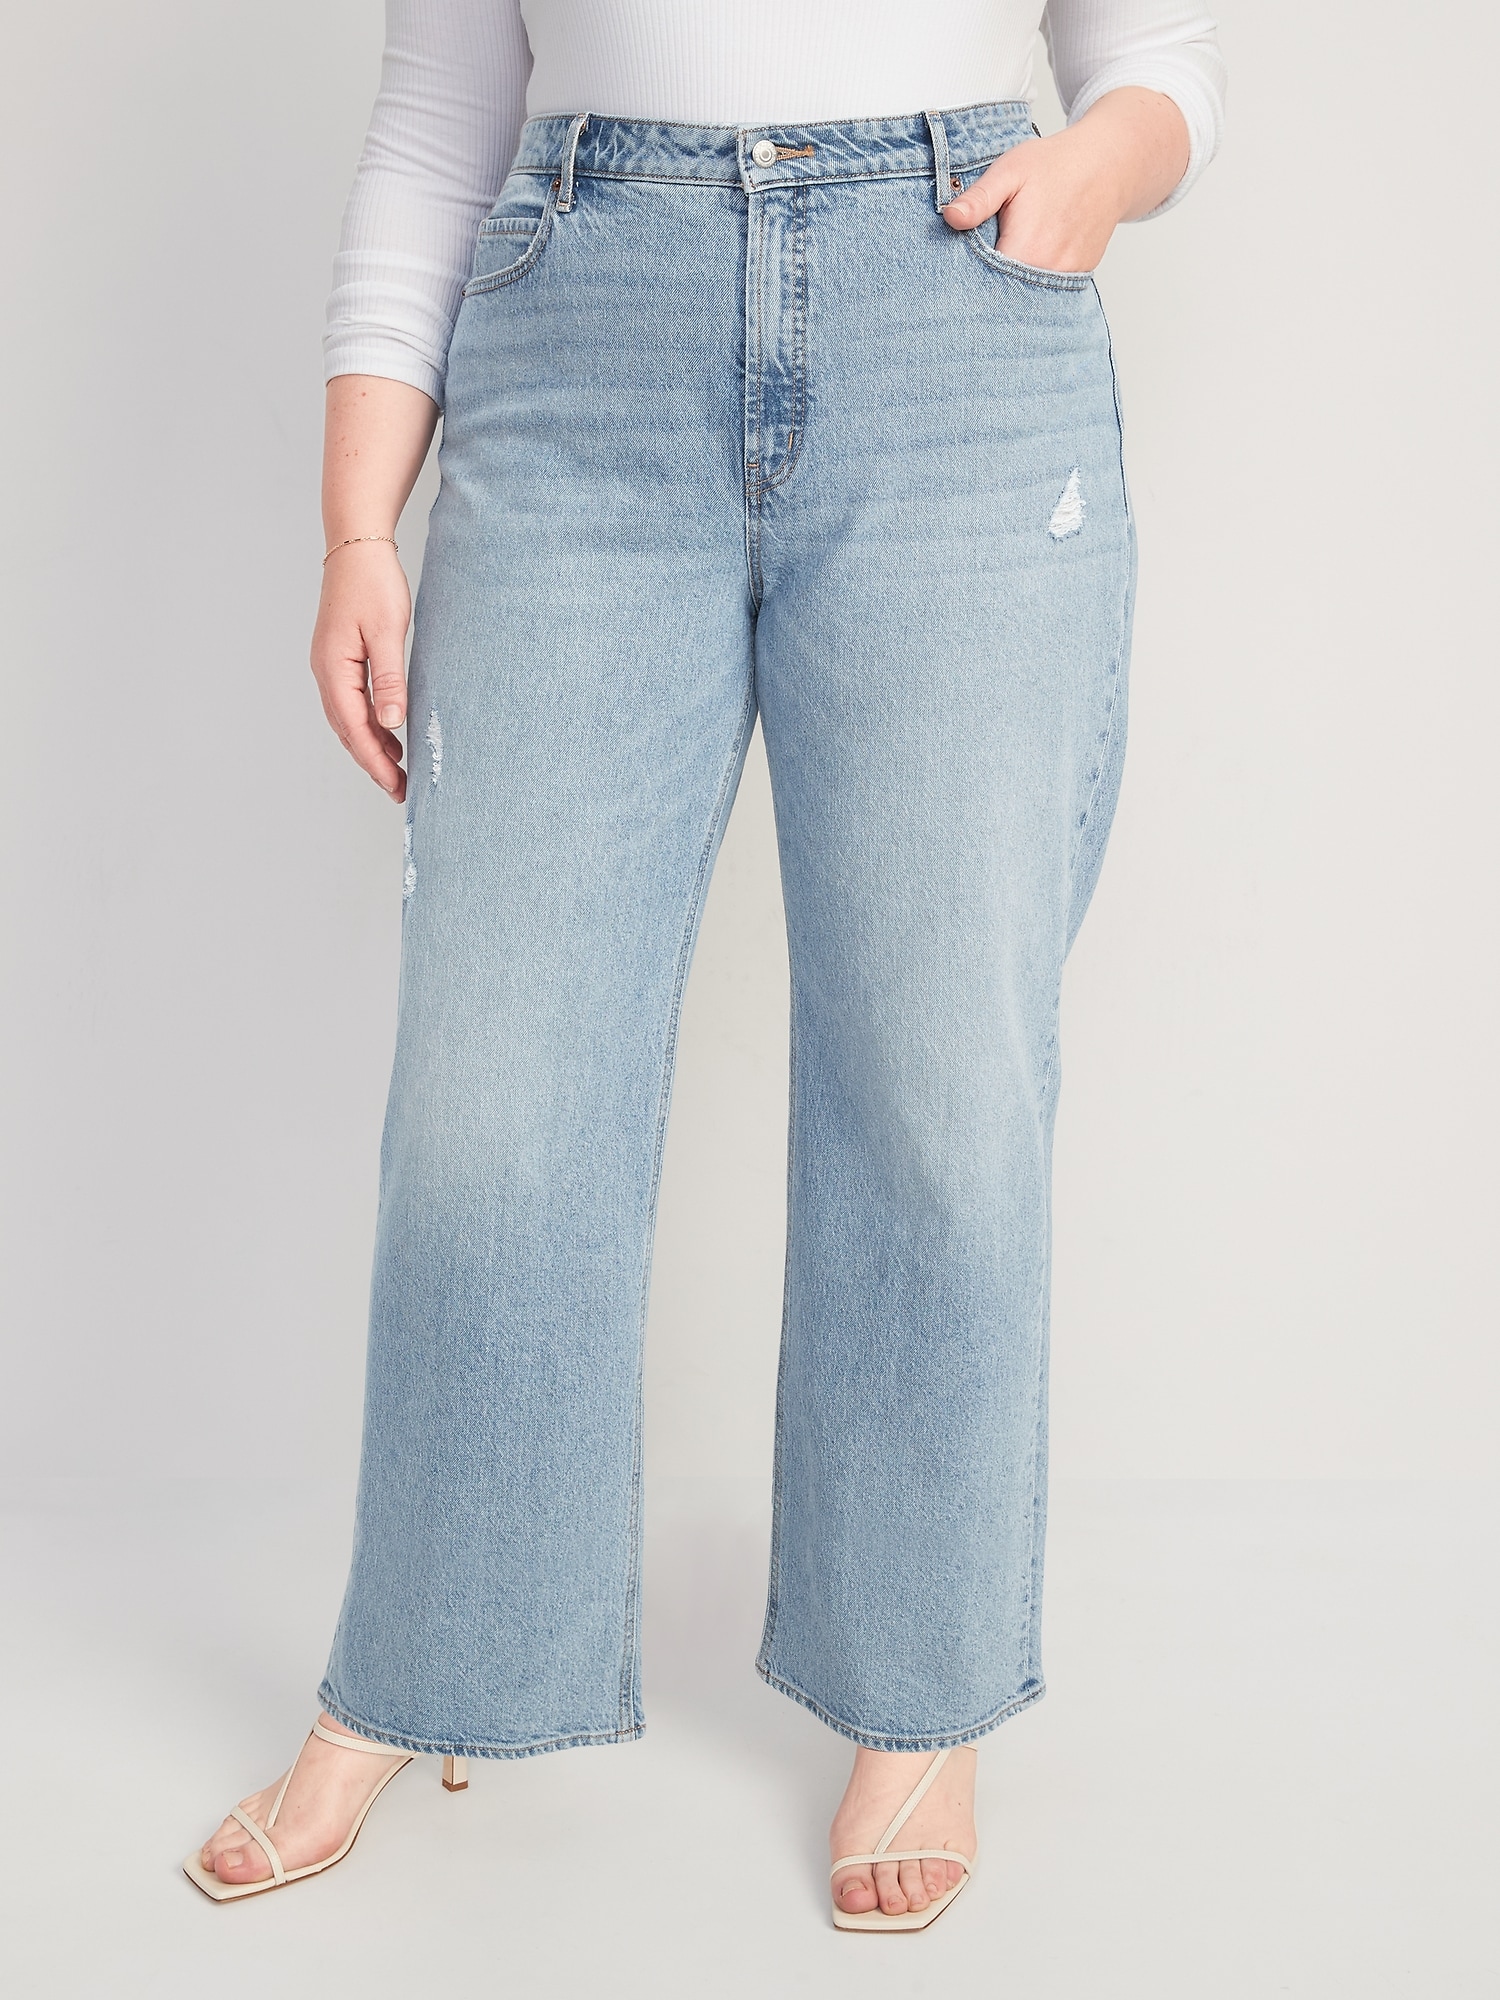 Buy Women Blue Regular Fit Light Wash Jeans Online - 706621 | Allen Solly-saigonsouth.com.vn